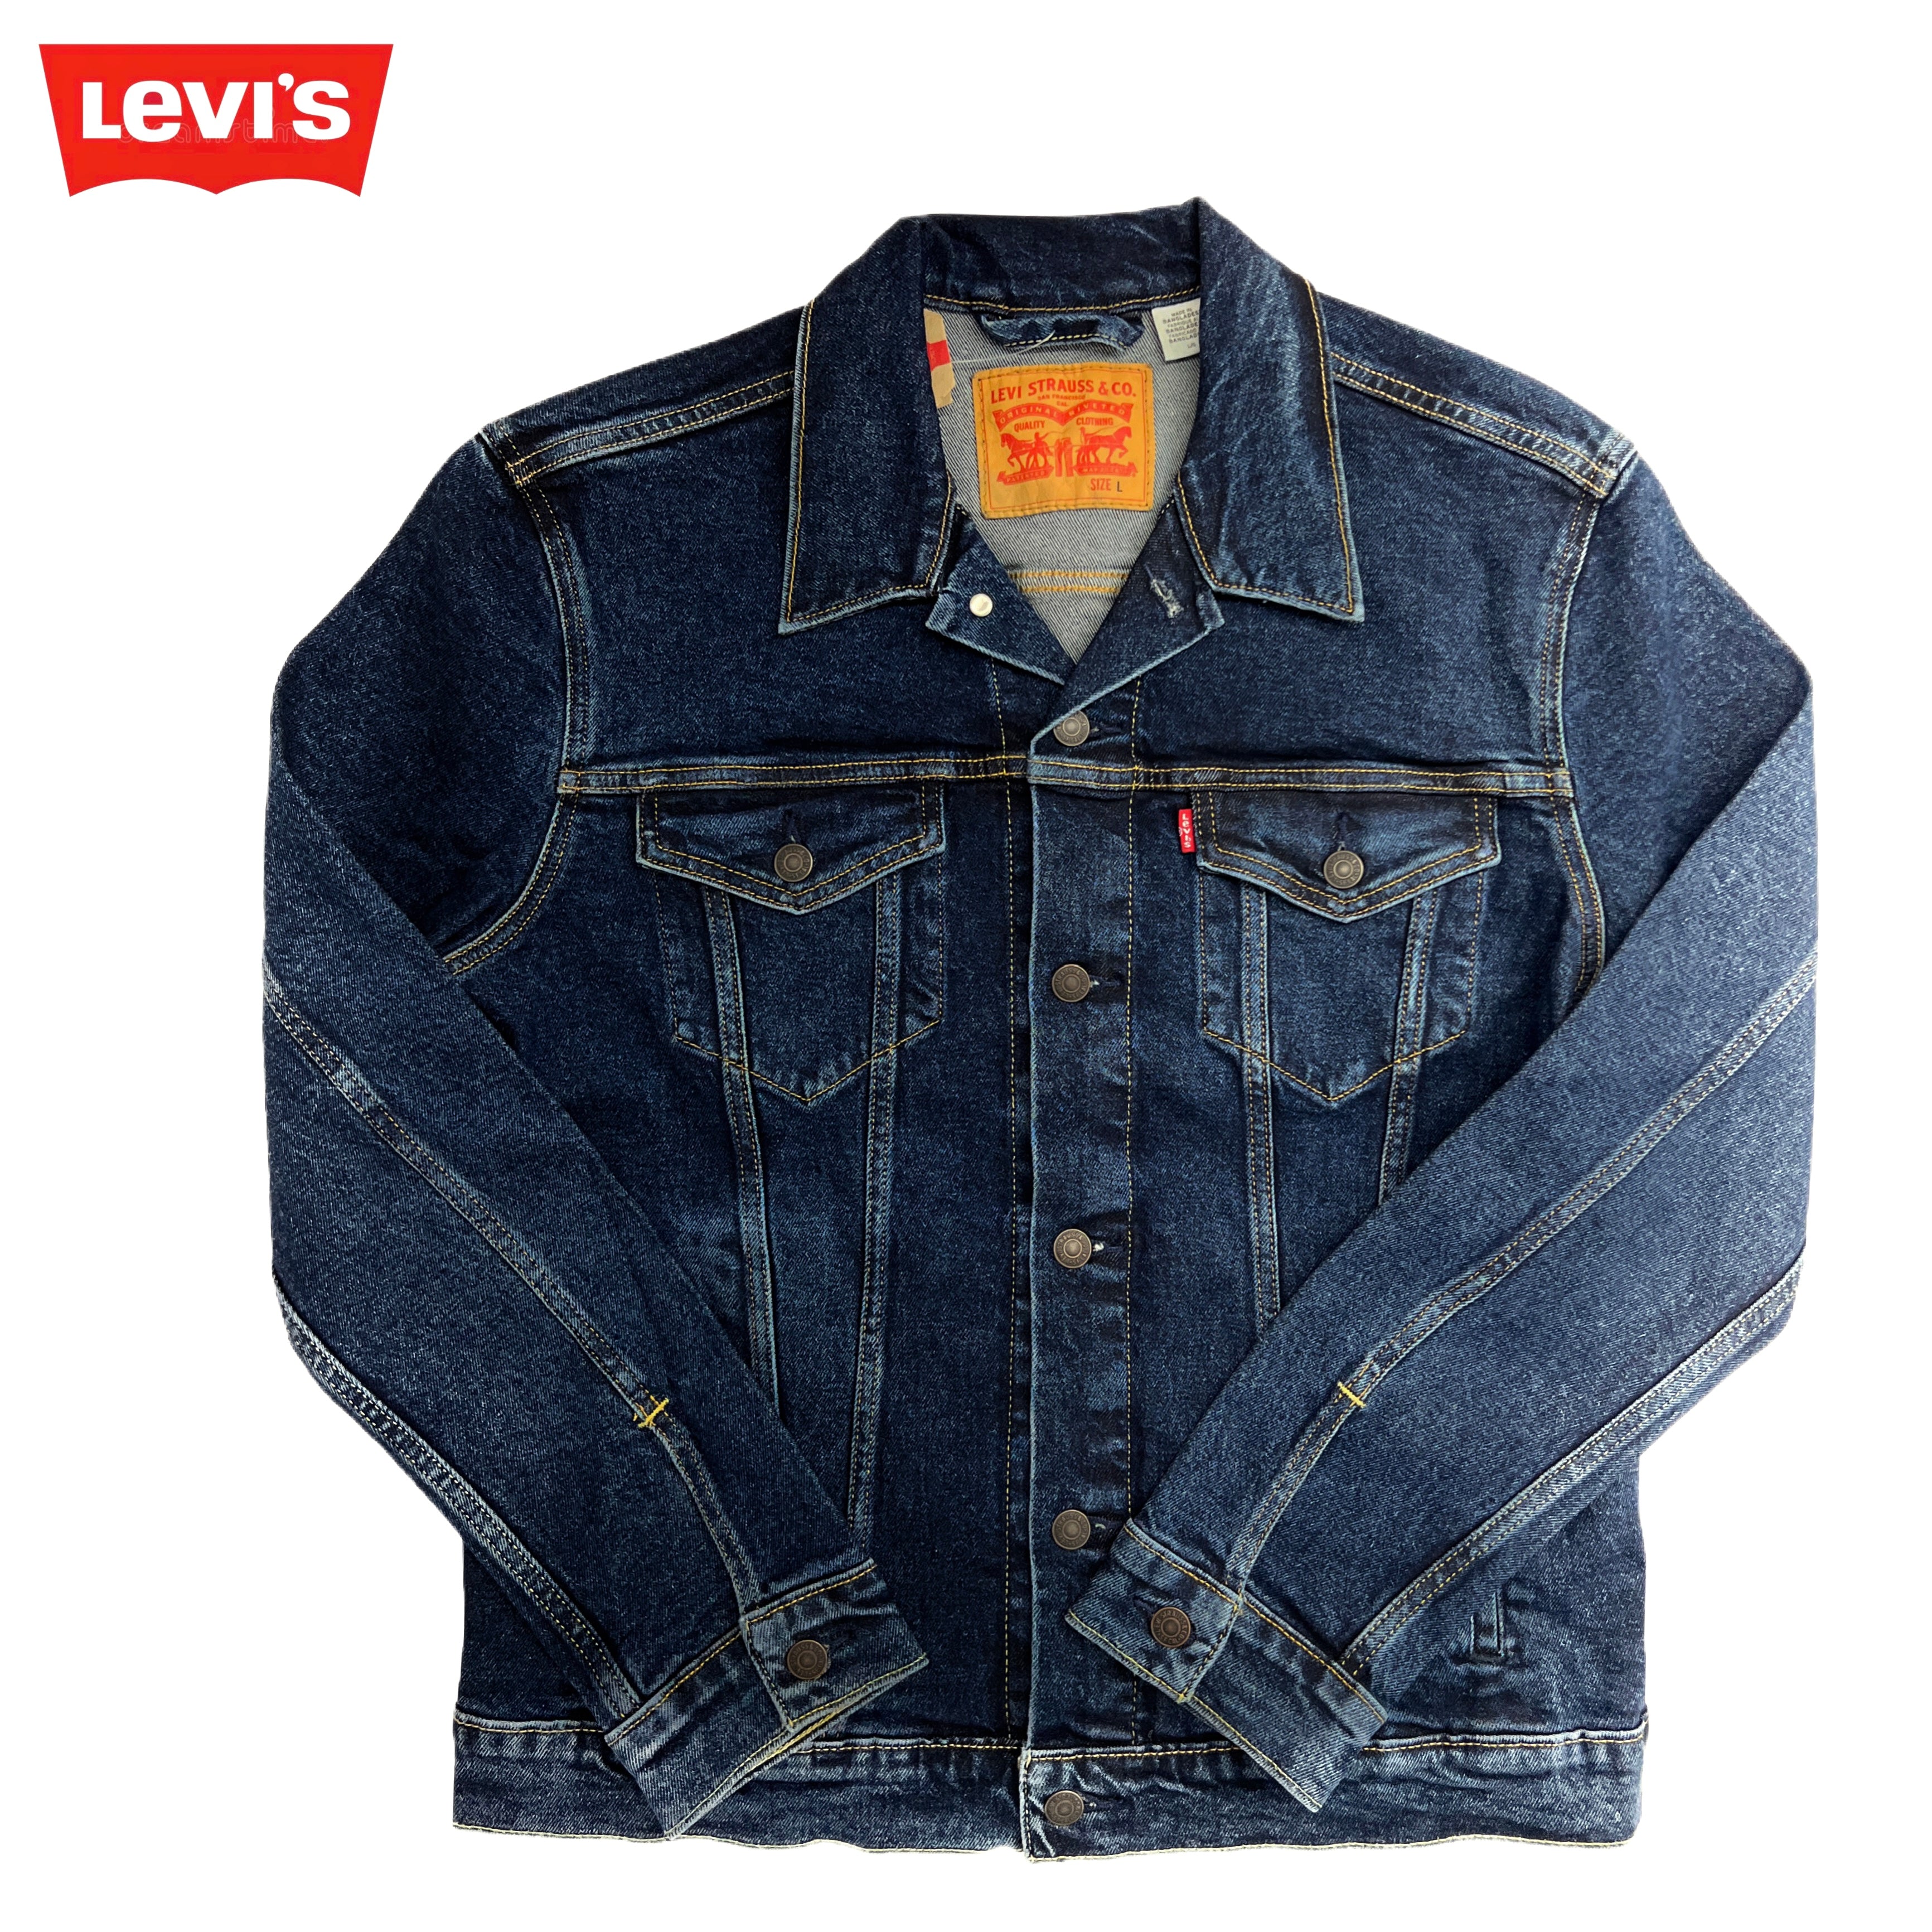 Levi's Trucker Jacket